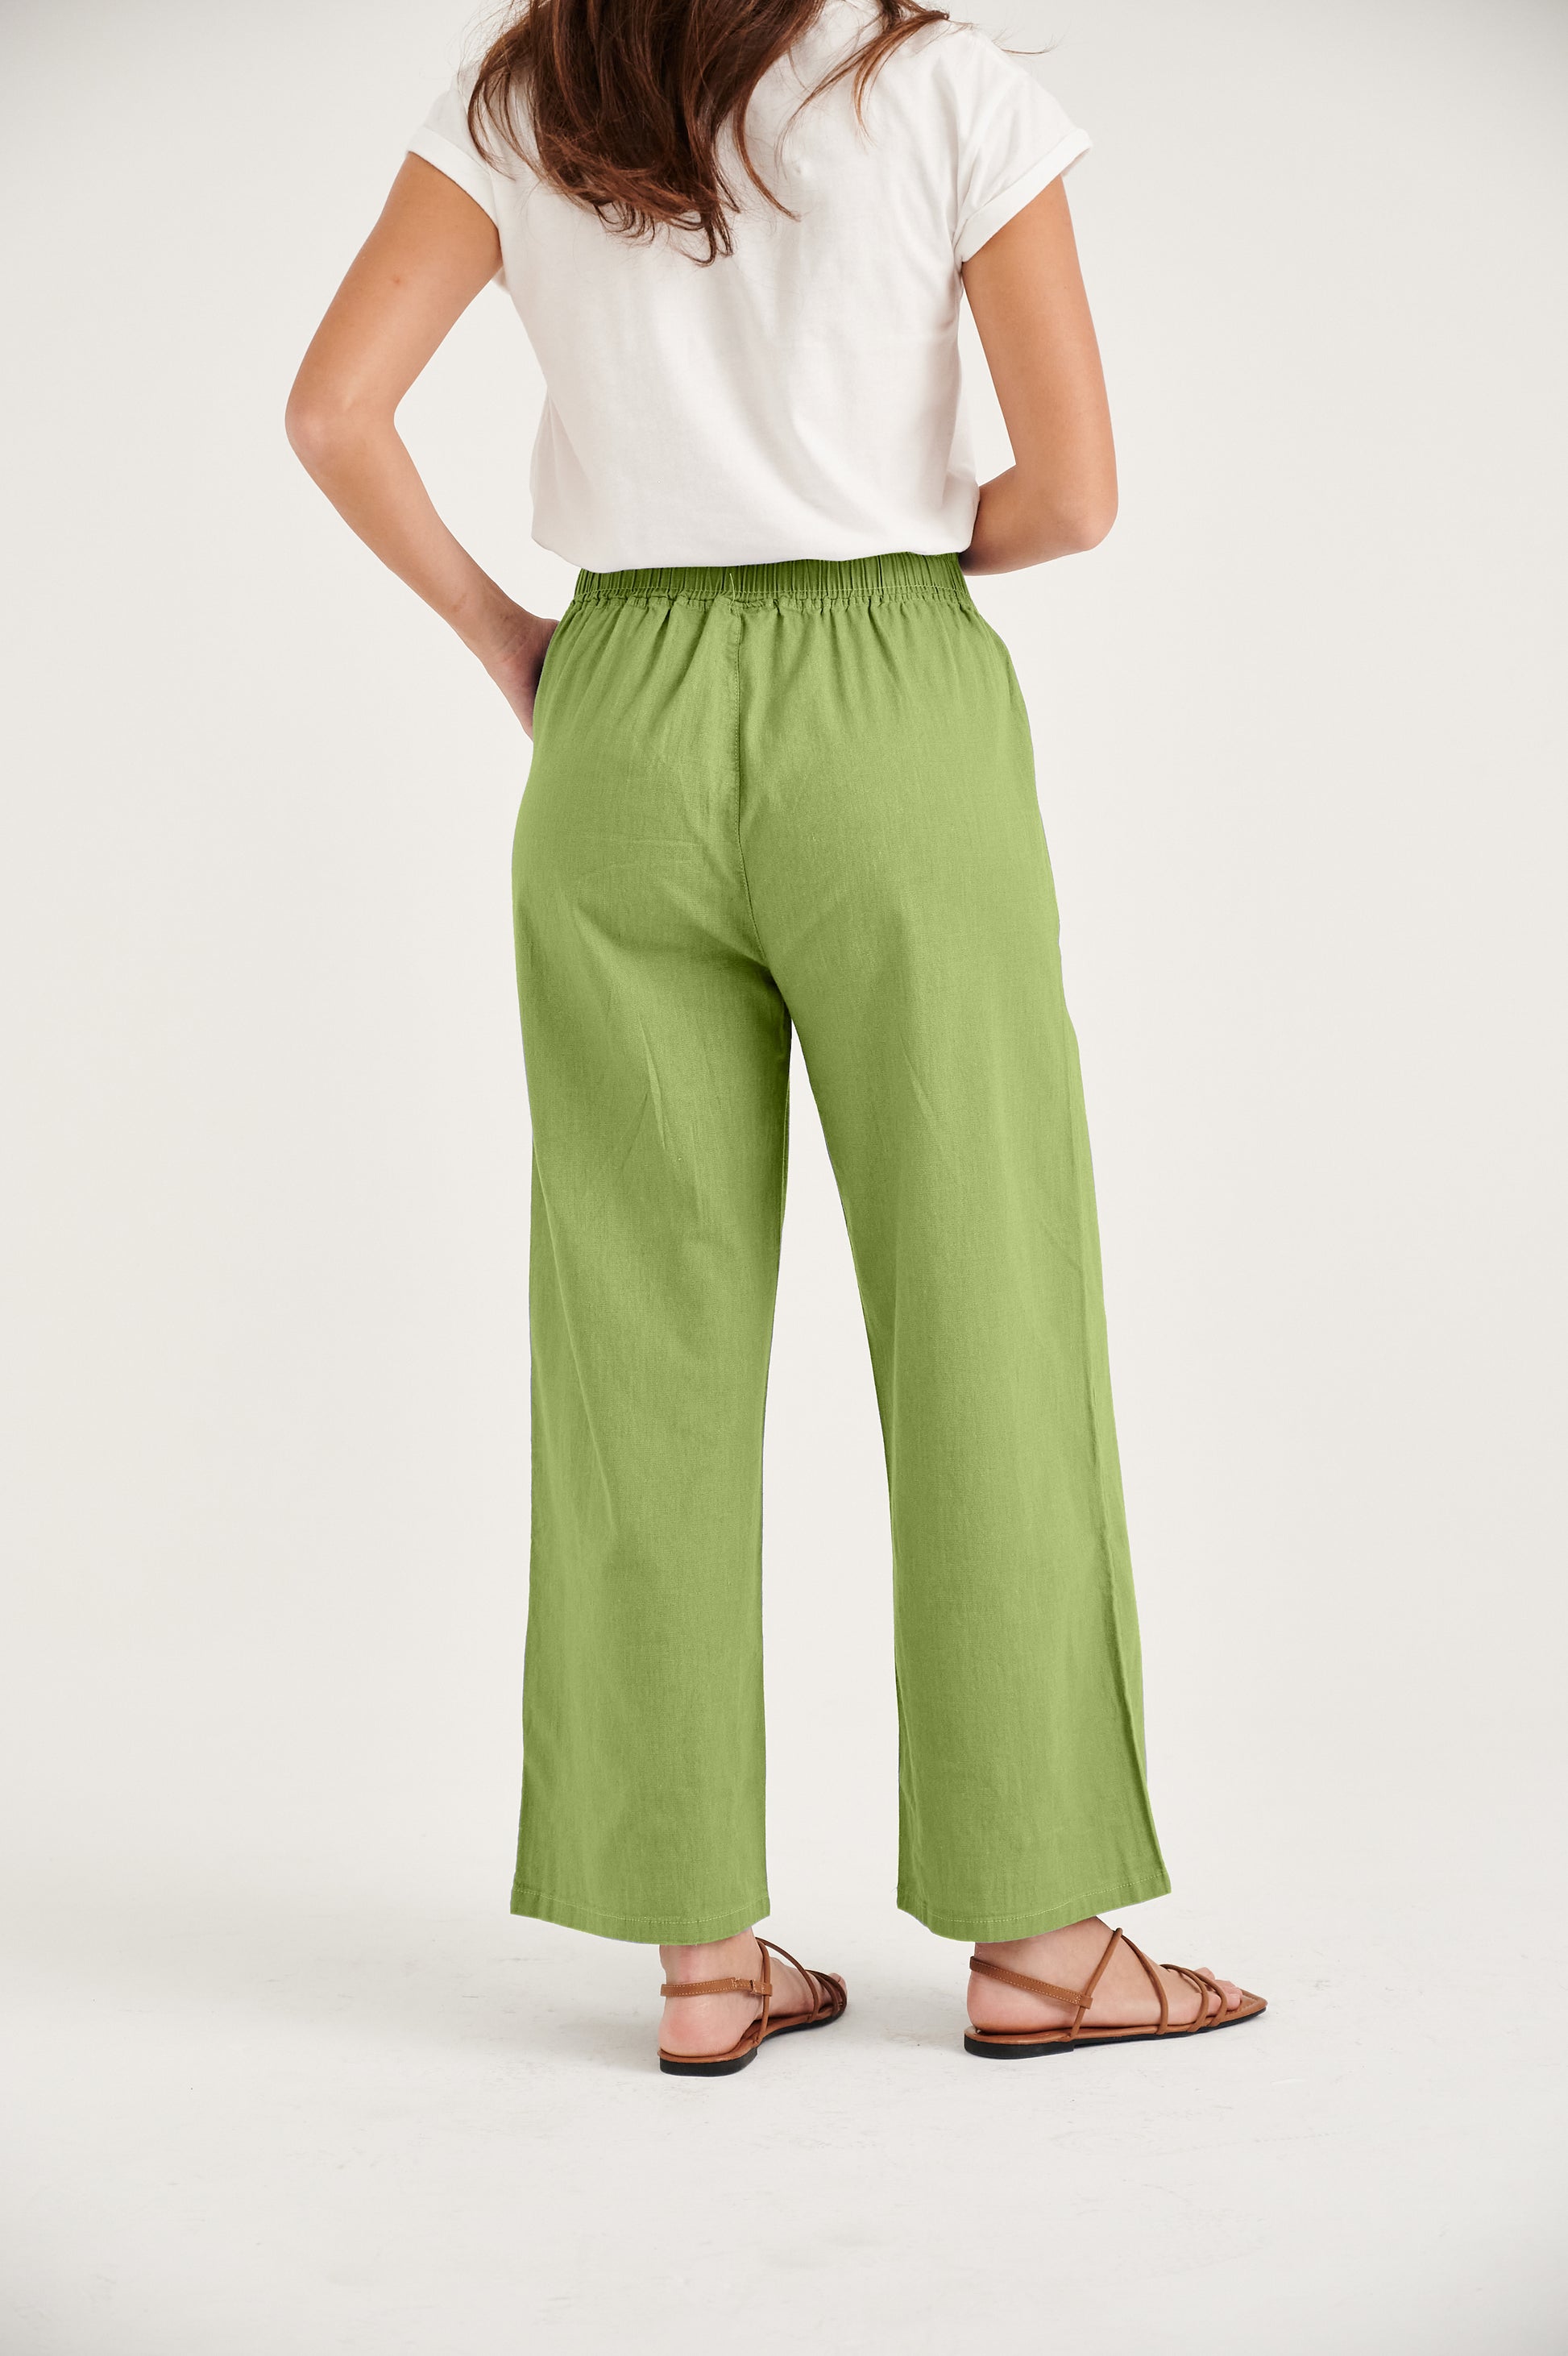 Green Cotton Pants for Women